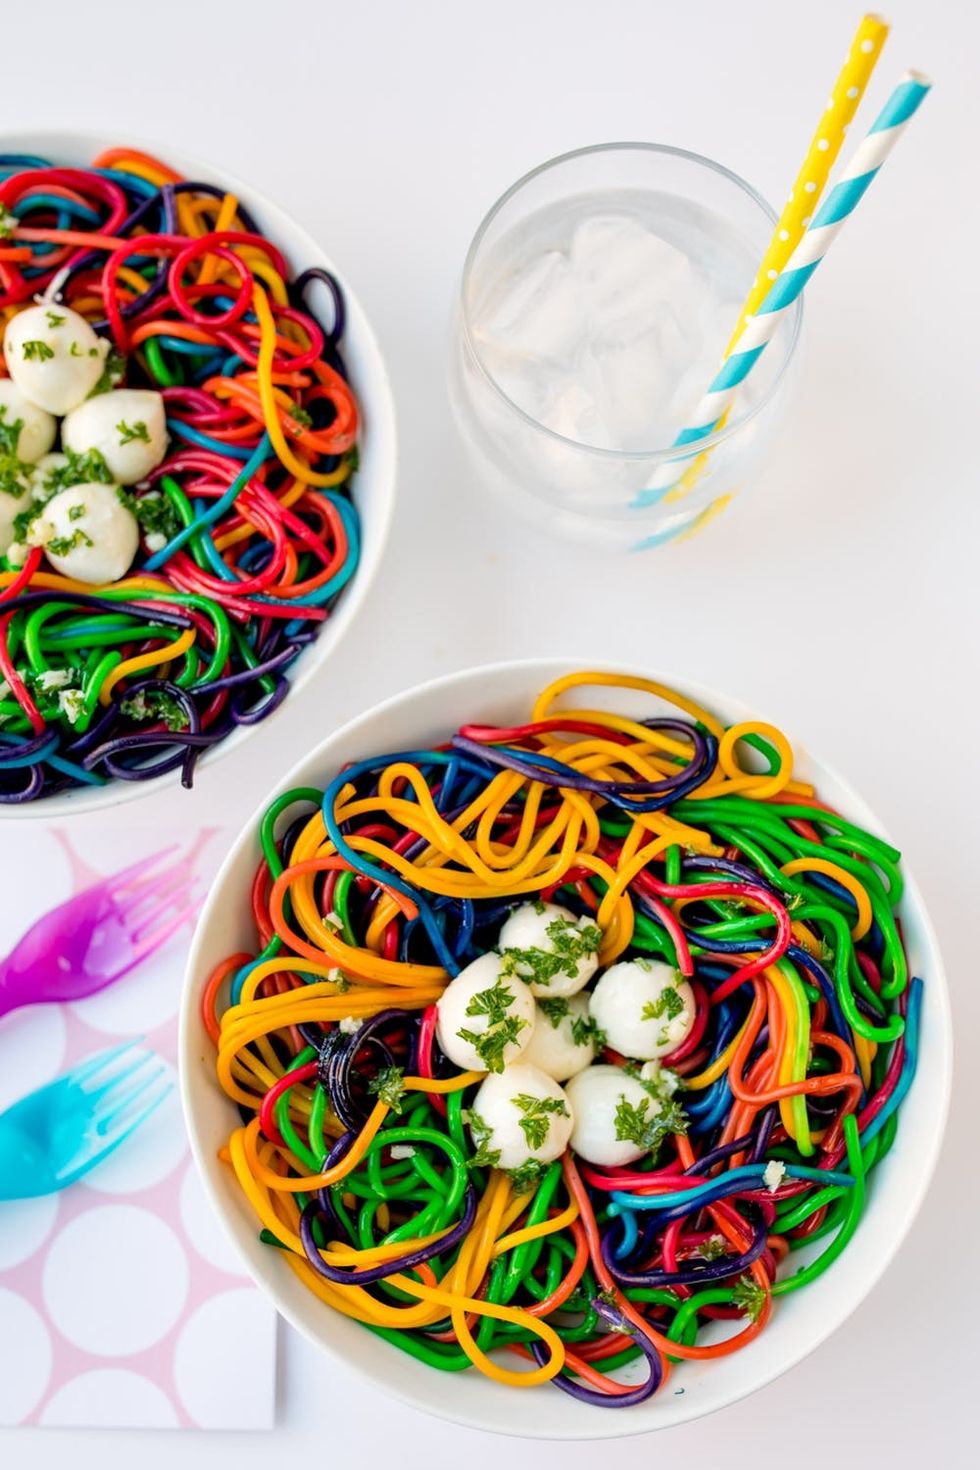 This Simple Rainbow Spaghetti Nest Recipe Actually Tastes Amazing Too!